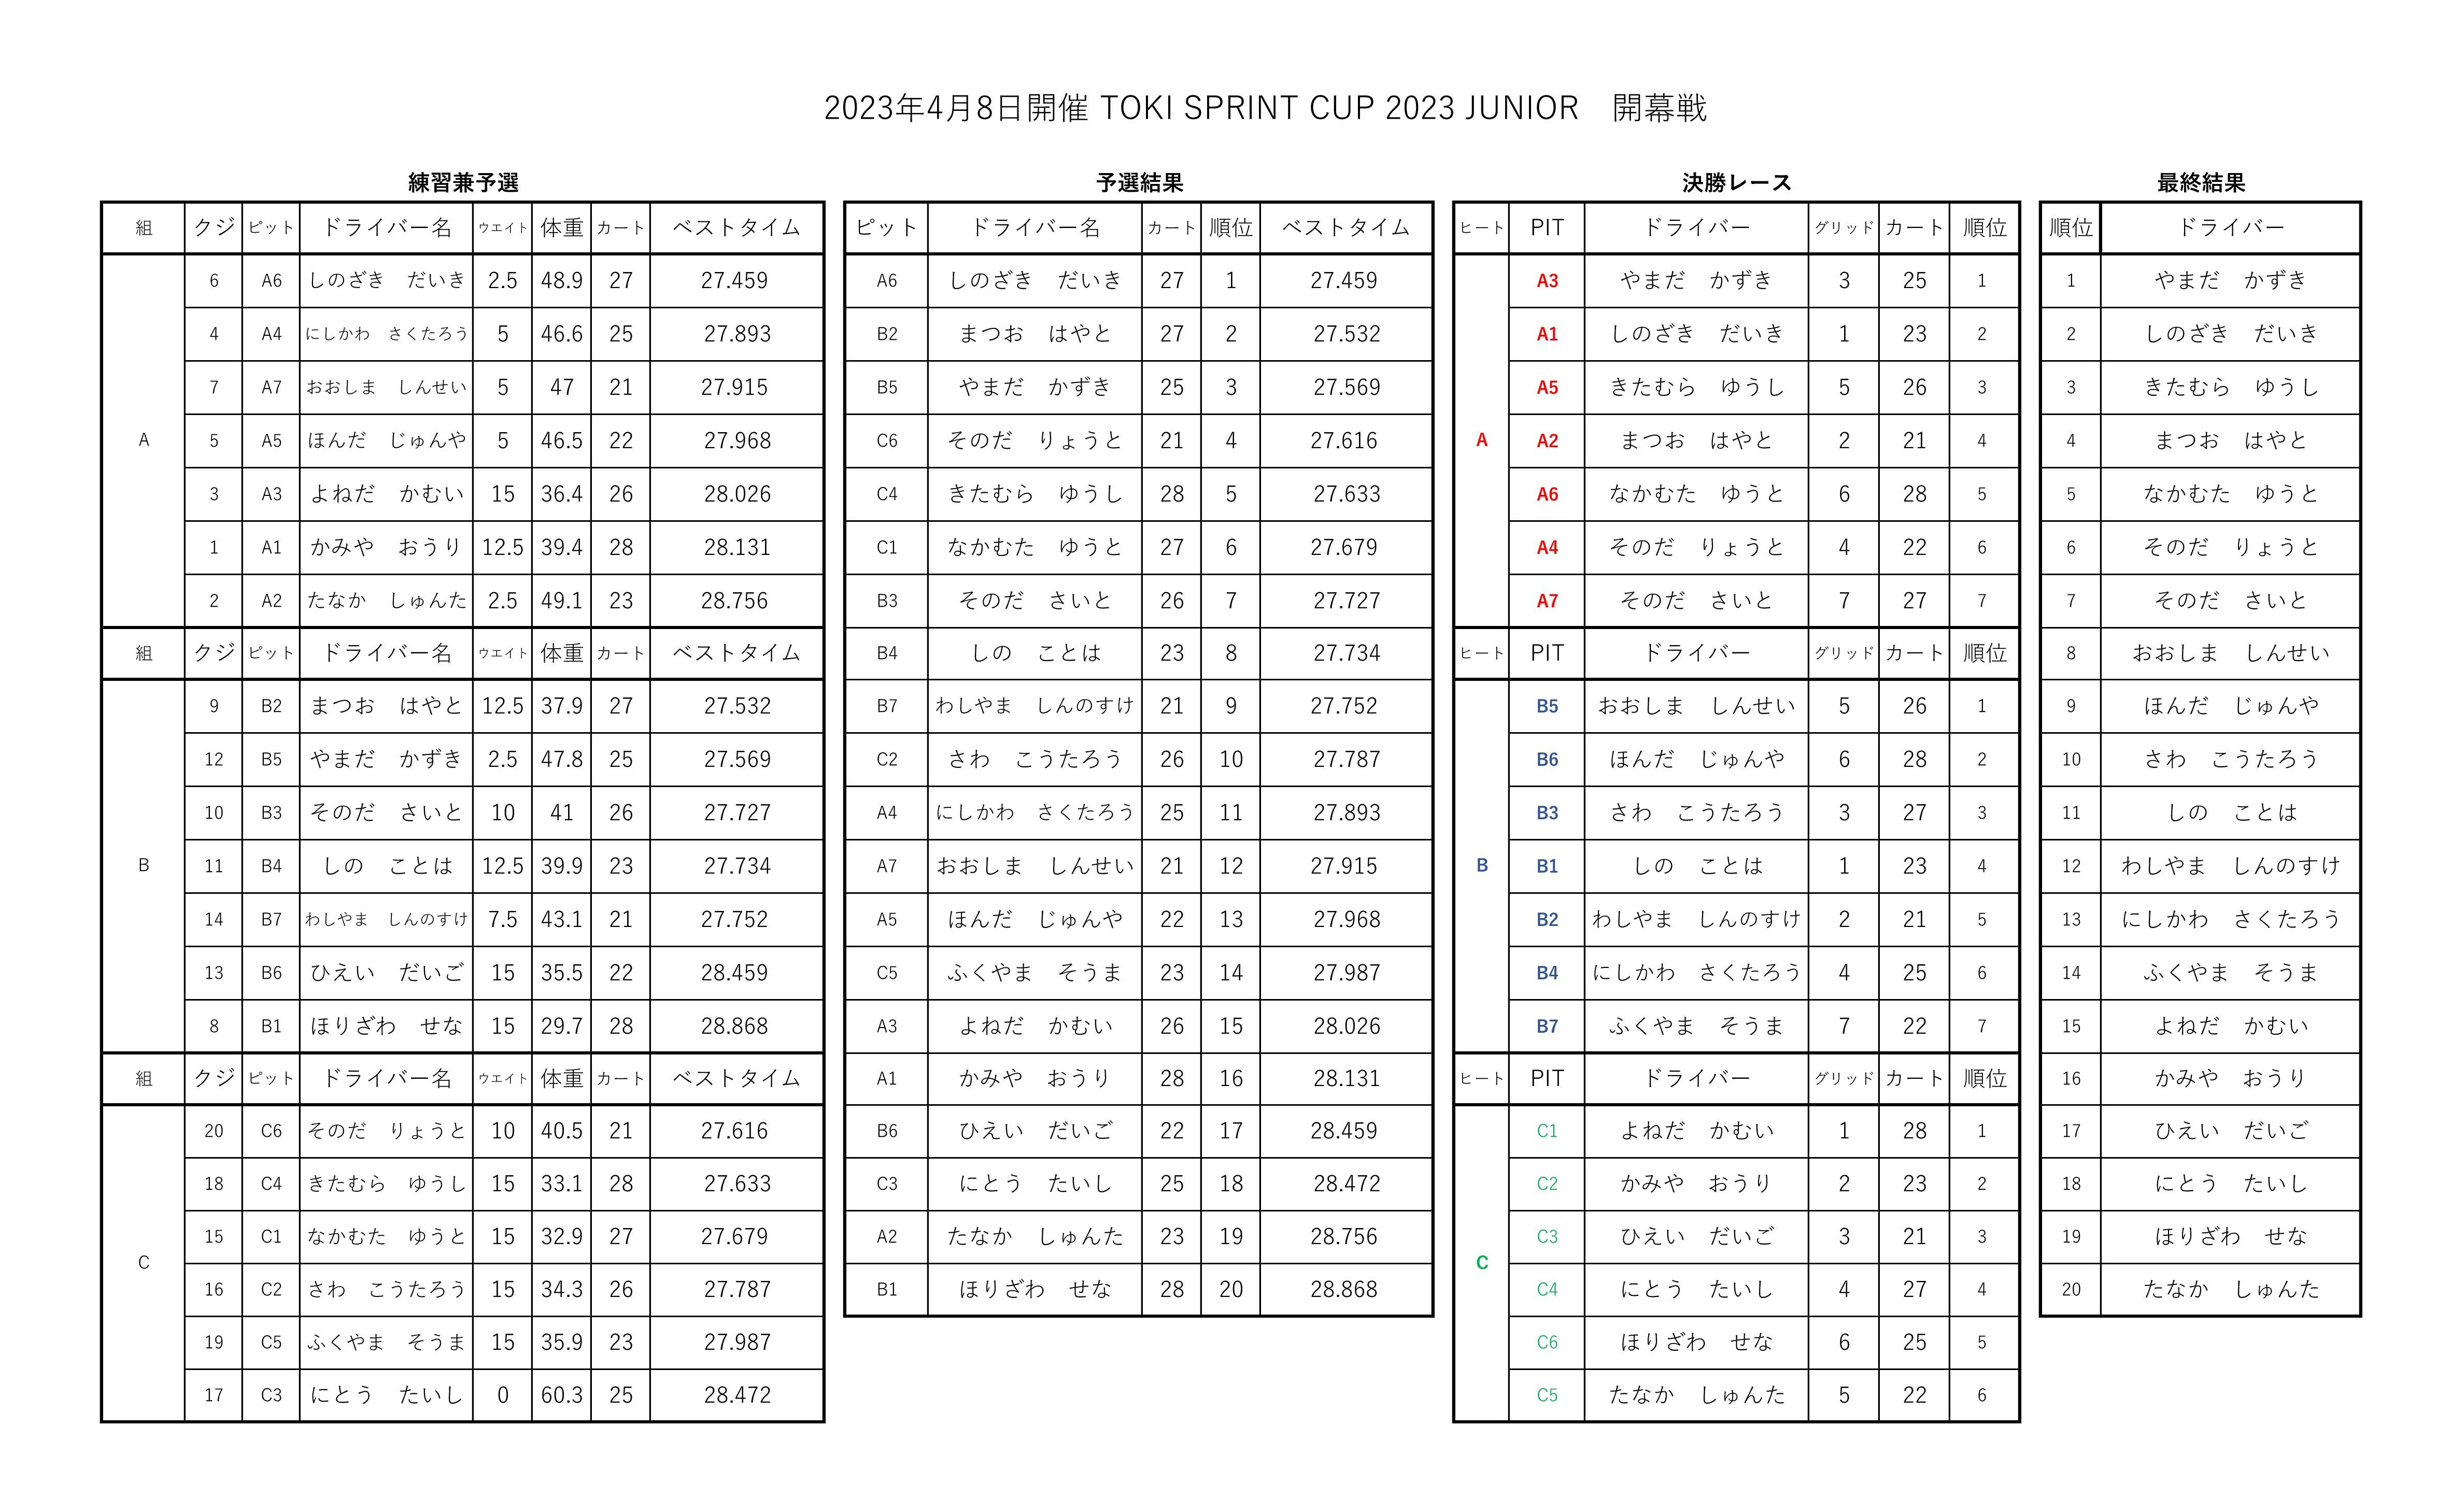 【SWS】TOKI SPRINT CUP JUNIOR 2023 Rd.1